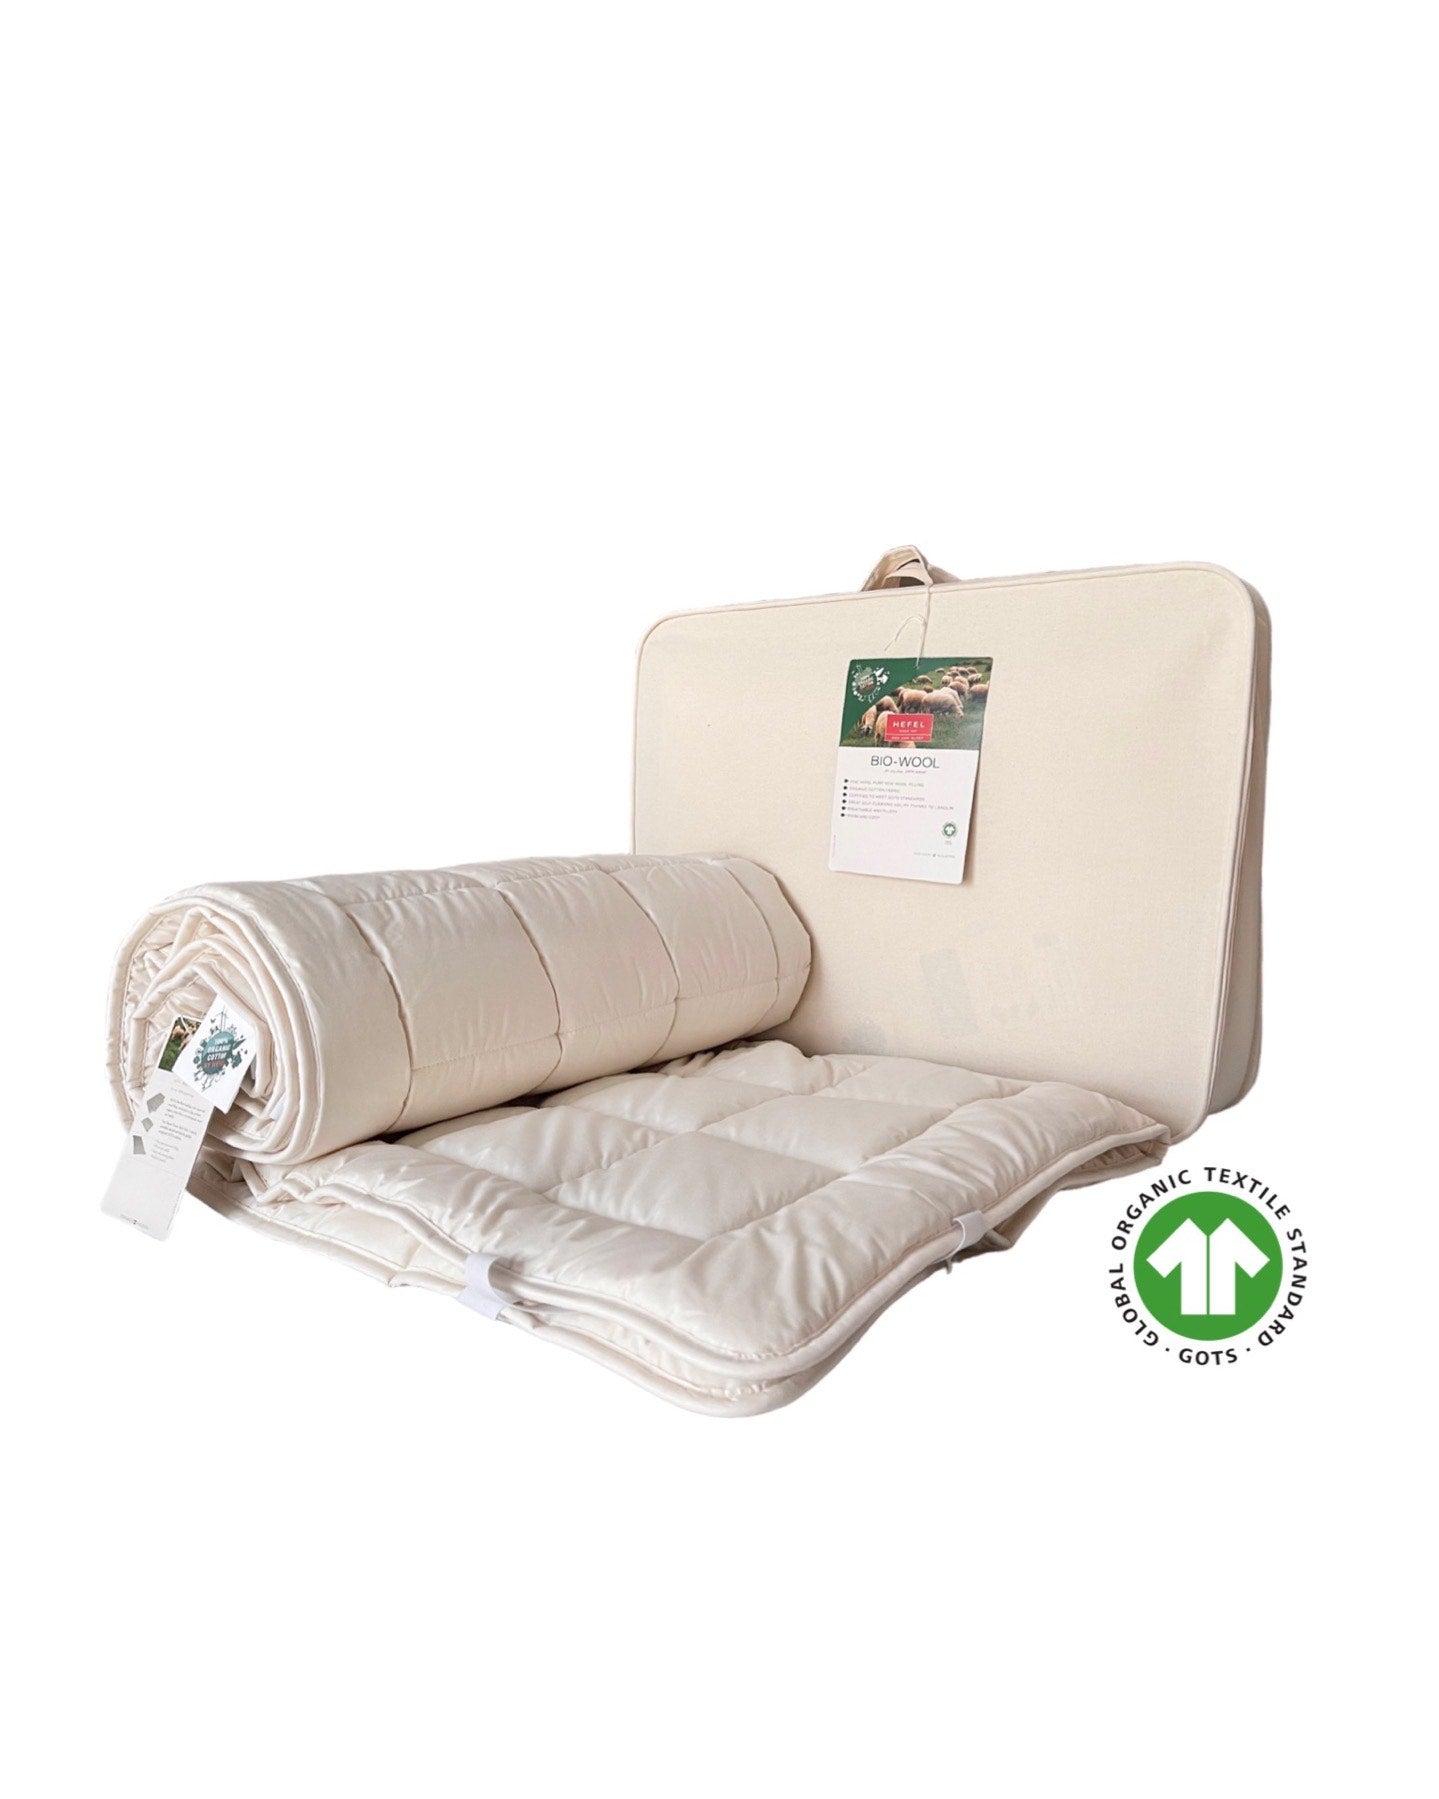 HEFEL Topper mattress topper Organic wool